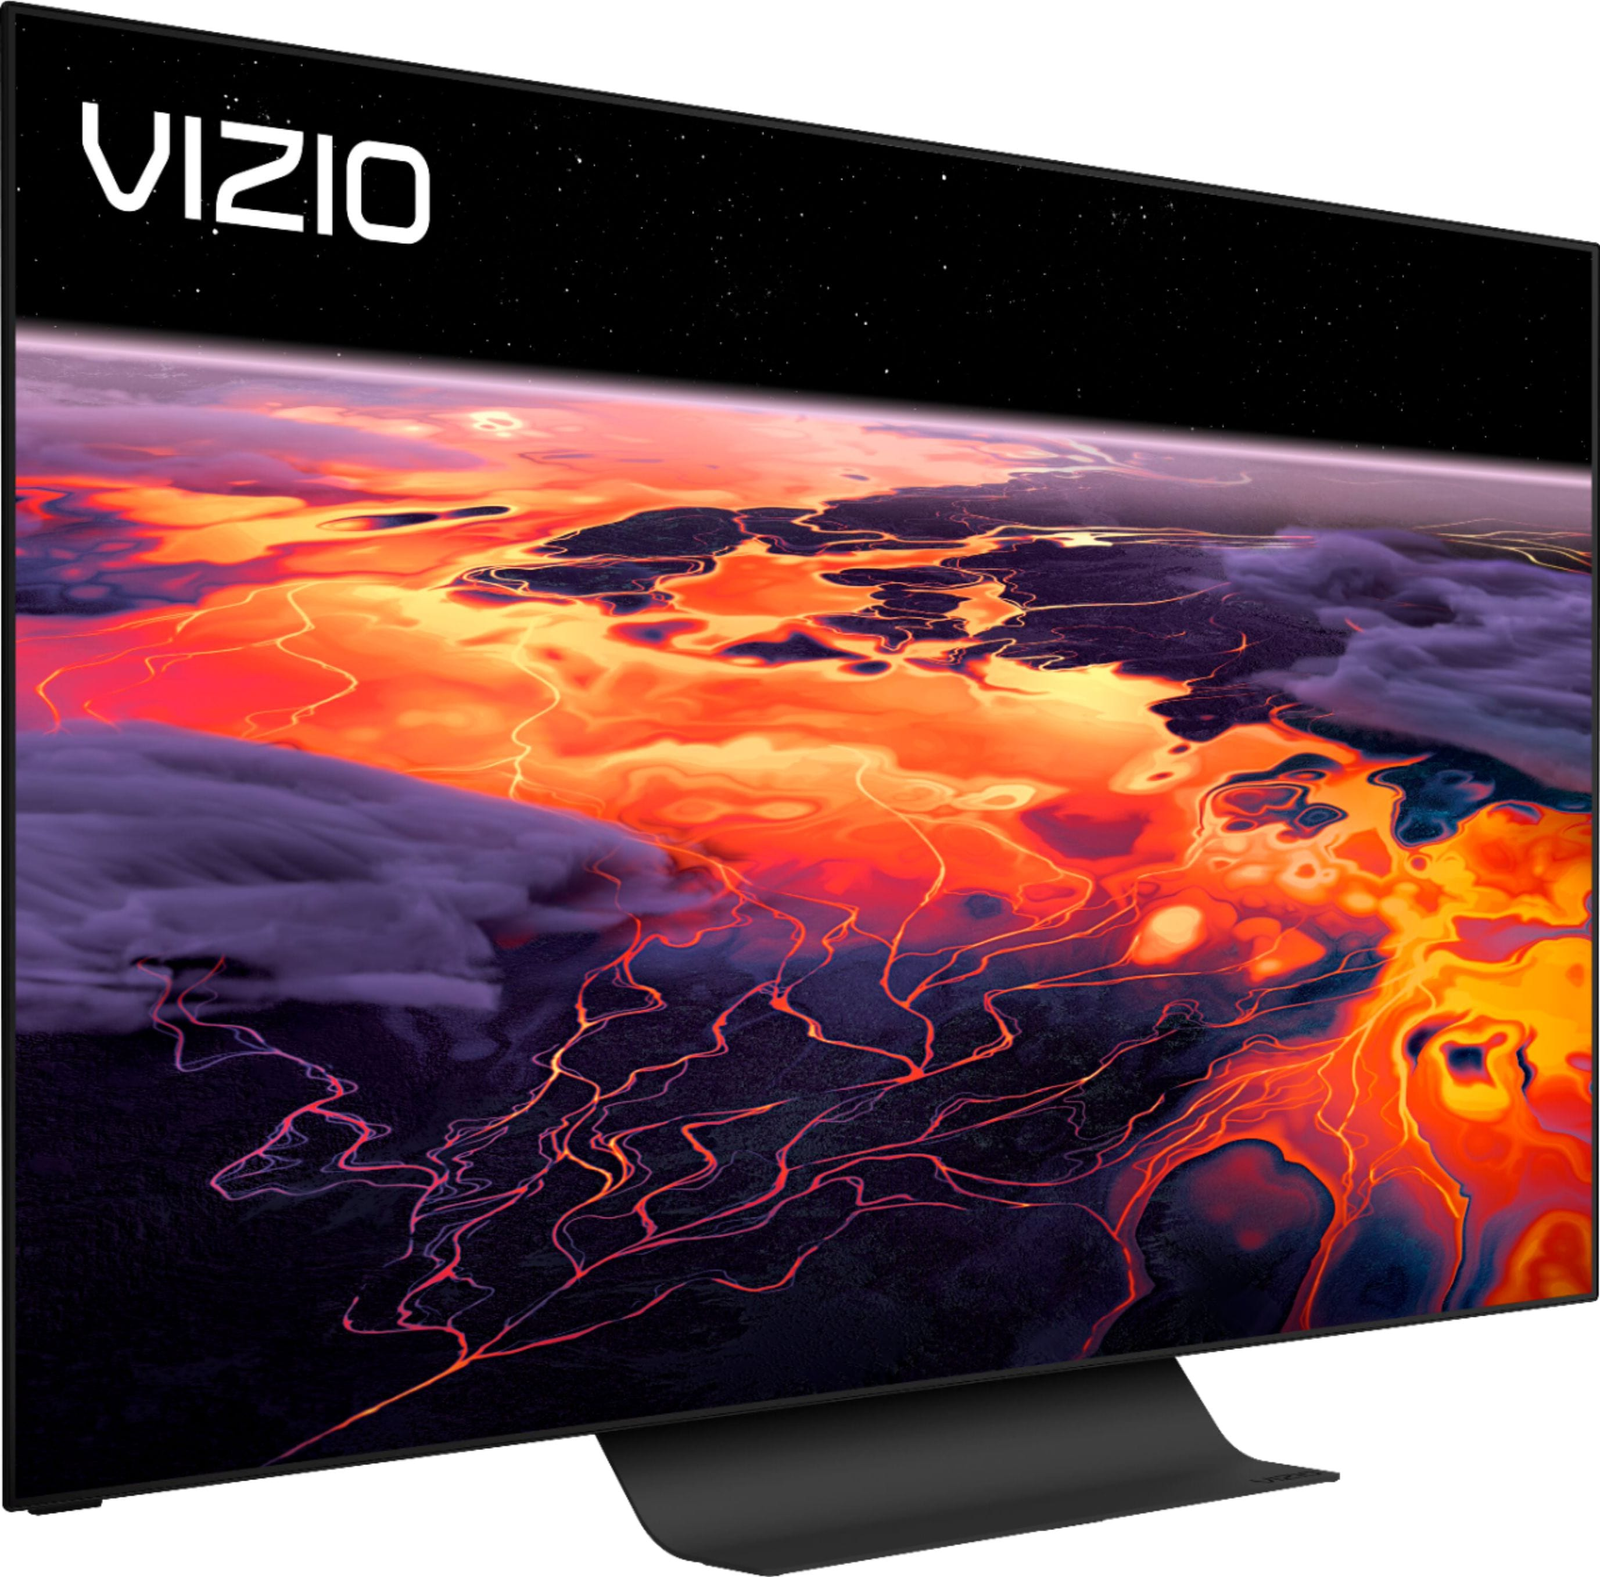 VIZIO - HDR LED Smart TV Serie-V 4K UHD de 50 pulgadas con Apple AirPlay y  Chromecast integrado, Dolby Vision, HDR10+, HDMI 2.1, modo de juego